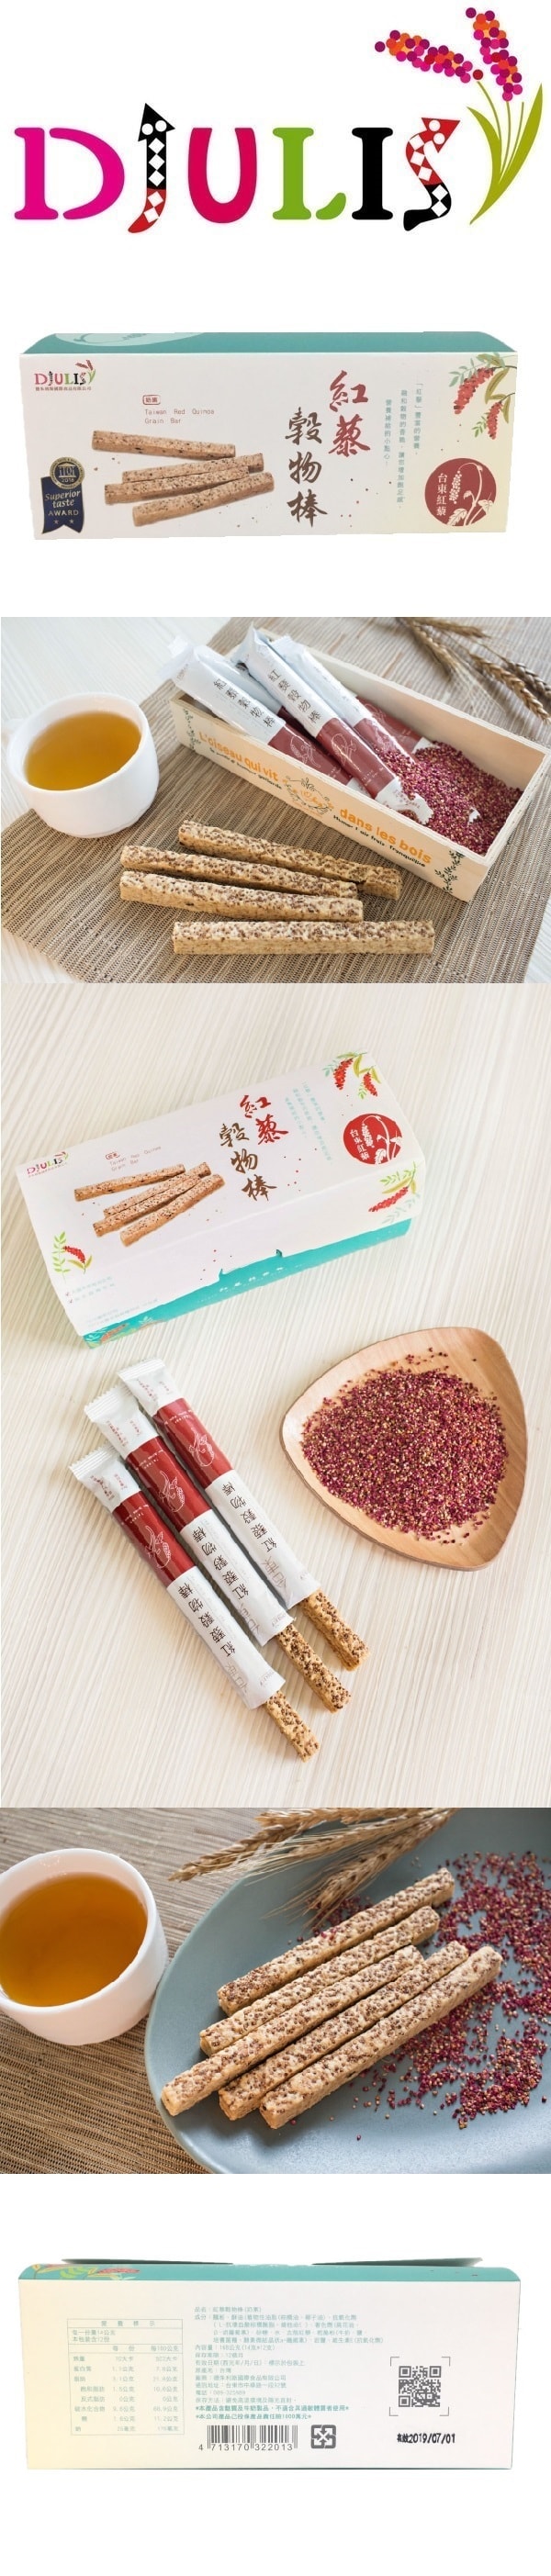 [Taiwan Direct Mail] De Julius Red Quinoa Cereal Bars 168g